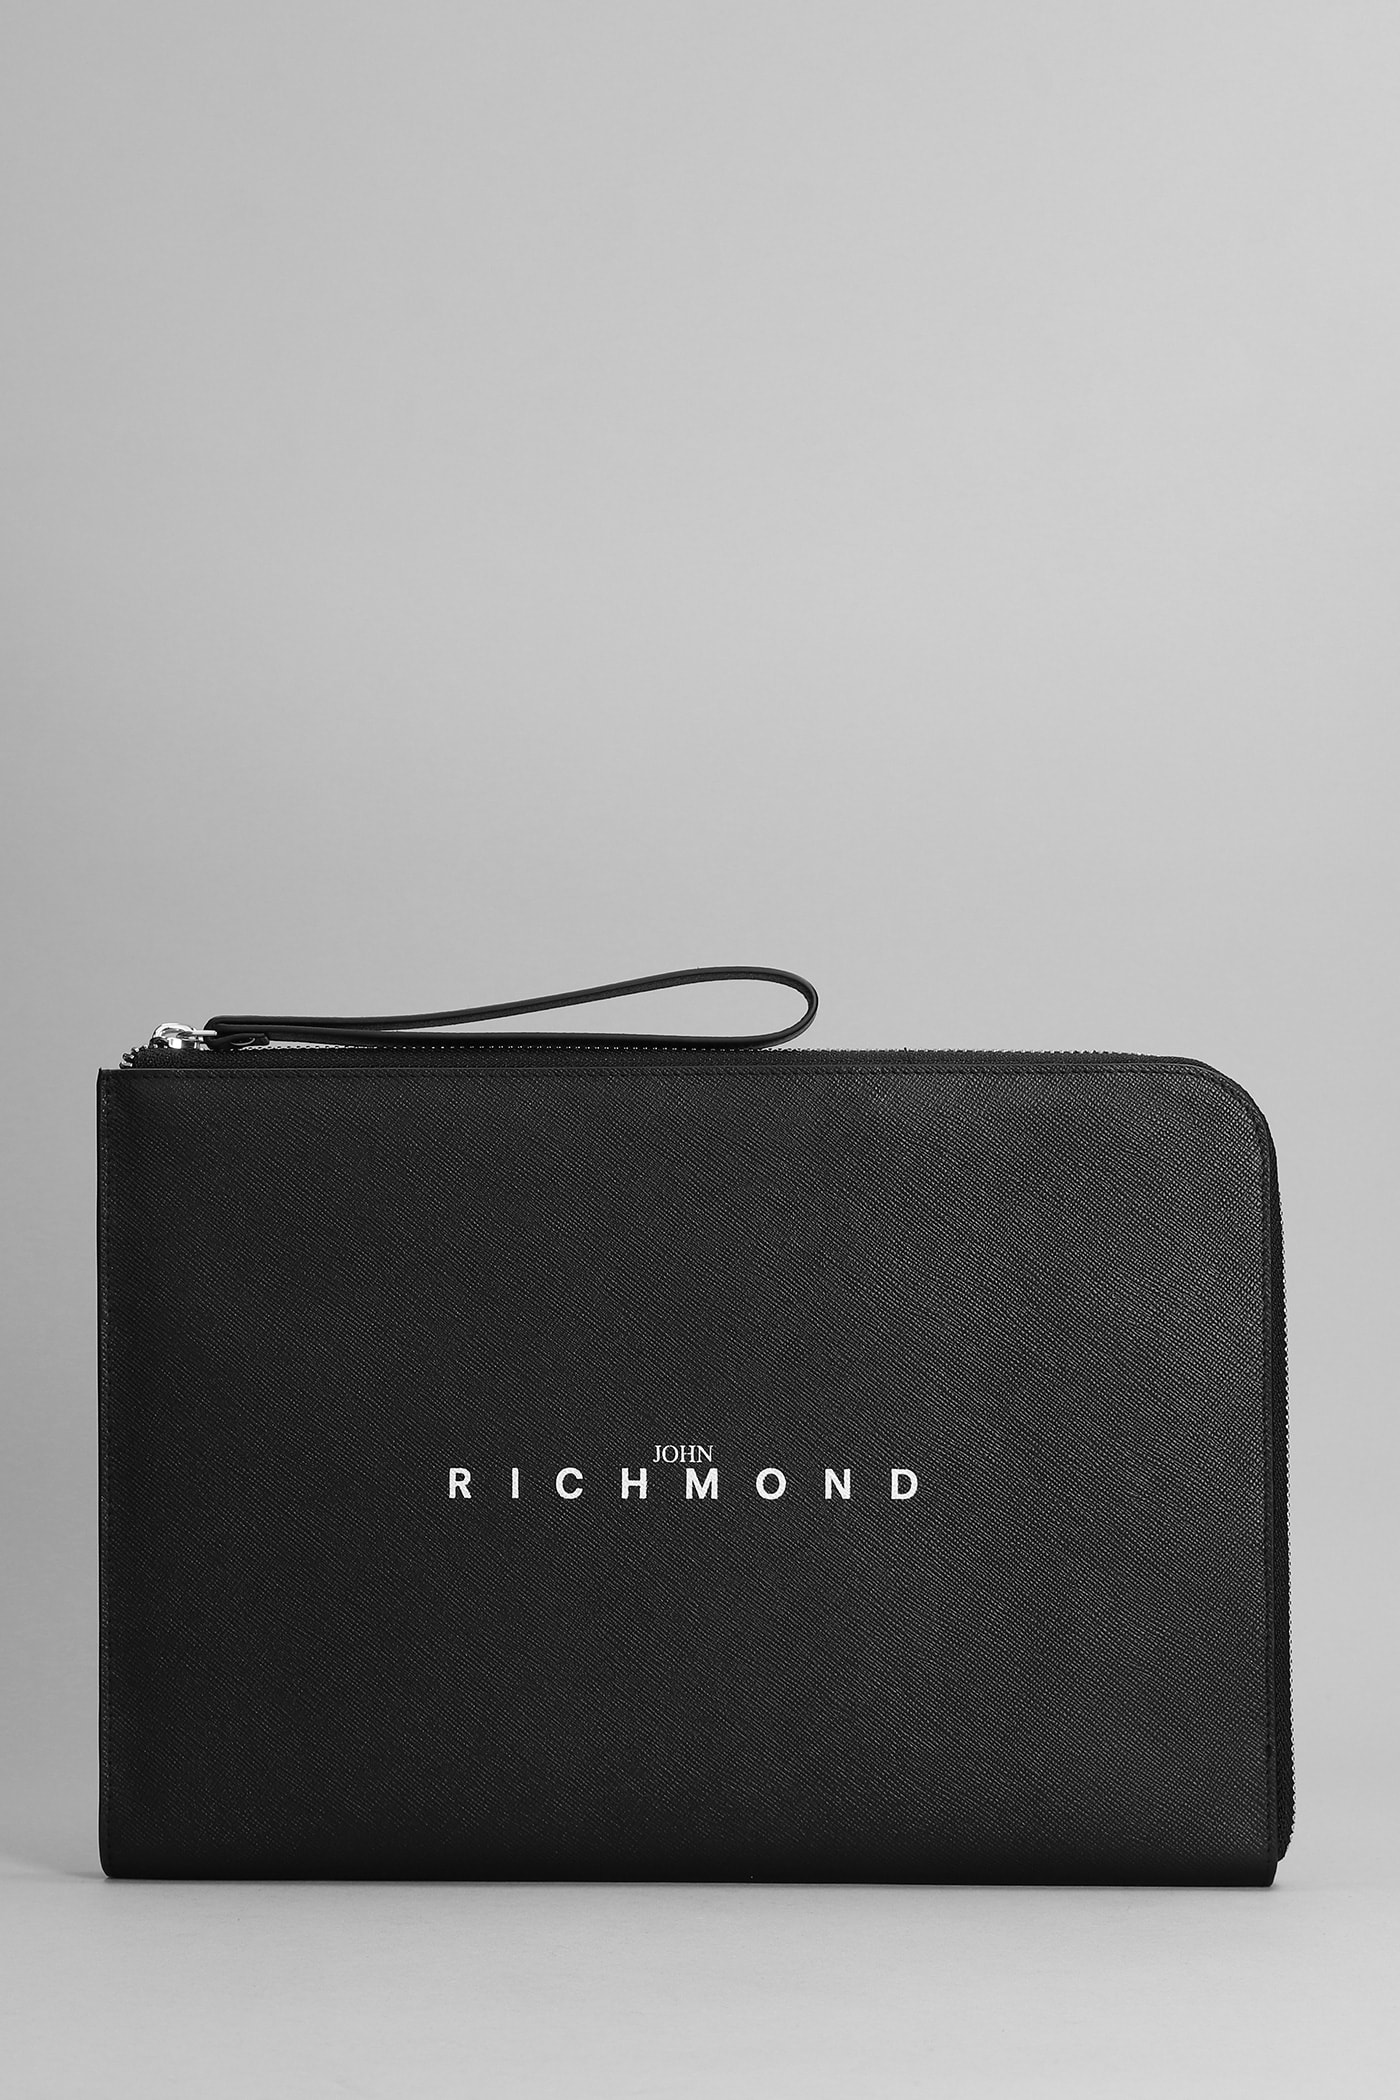 John Richmond Clutch In Black Leather